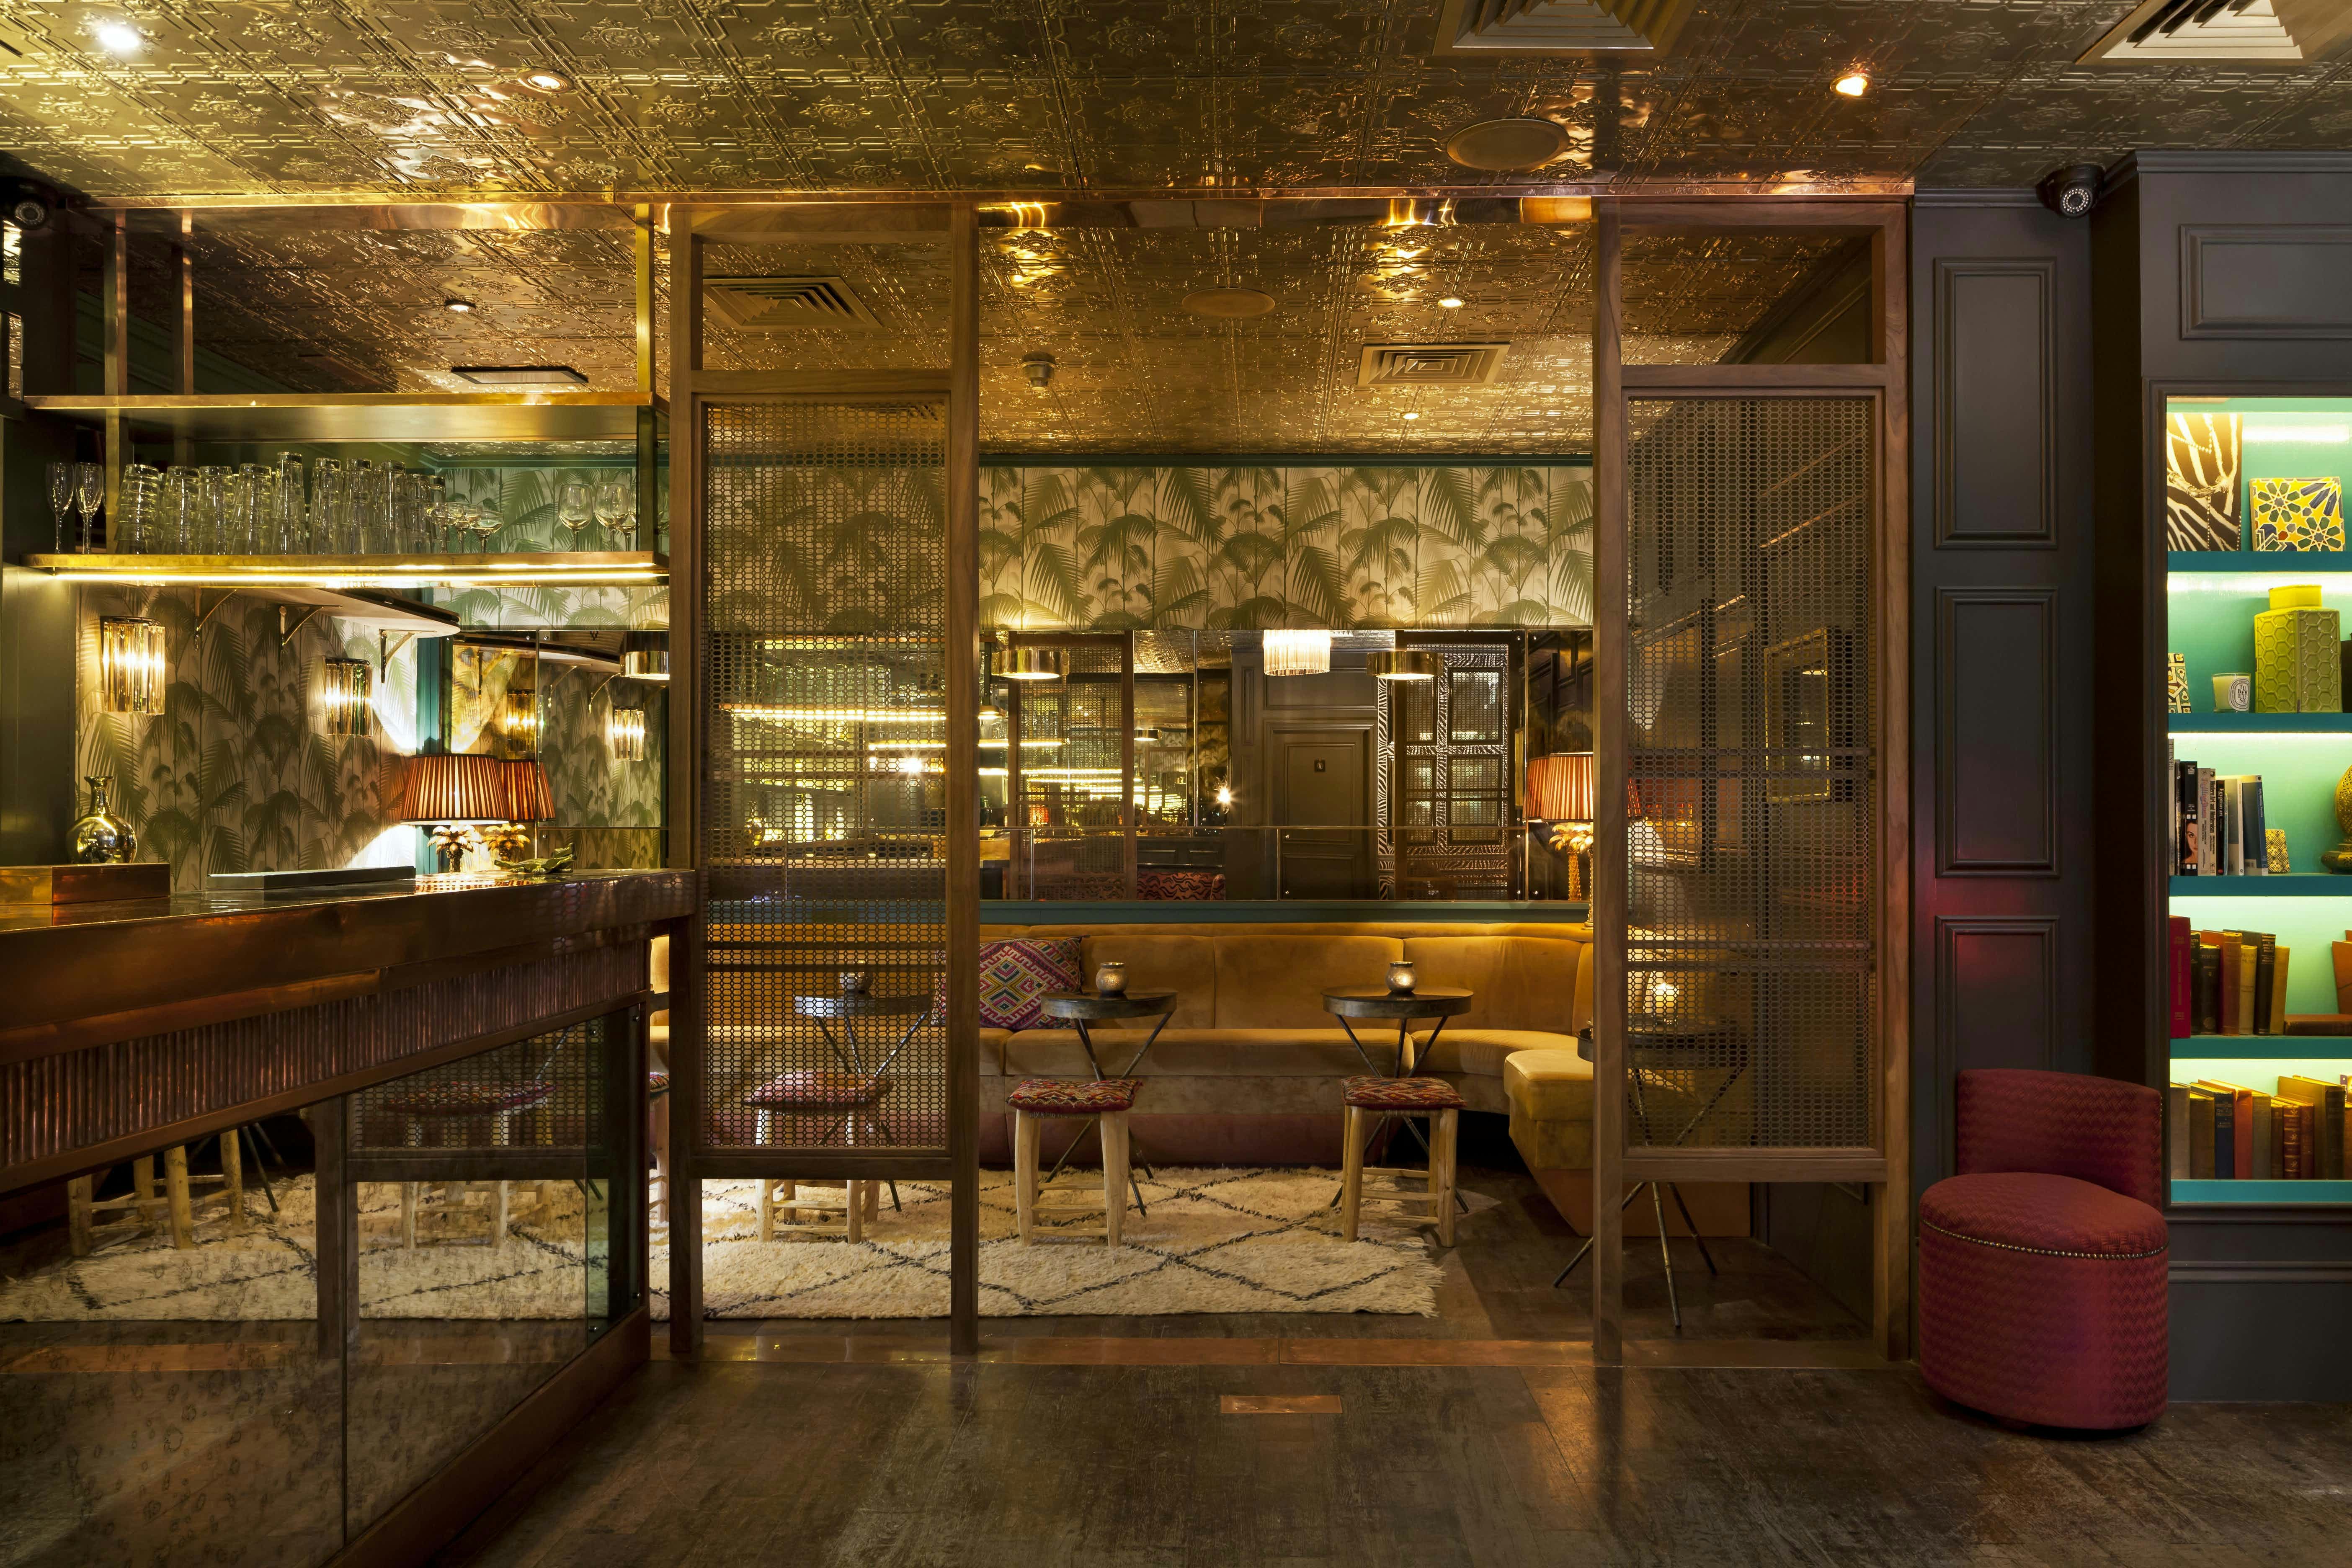 The Scotch of St James - Lounge Bar image 2